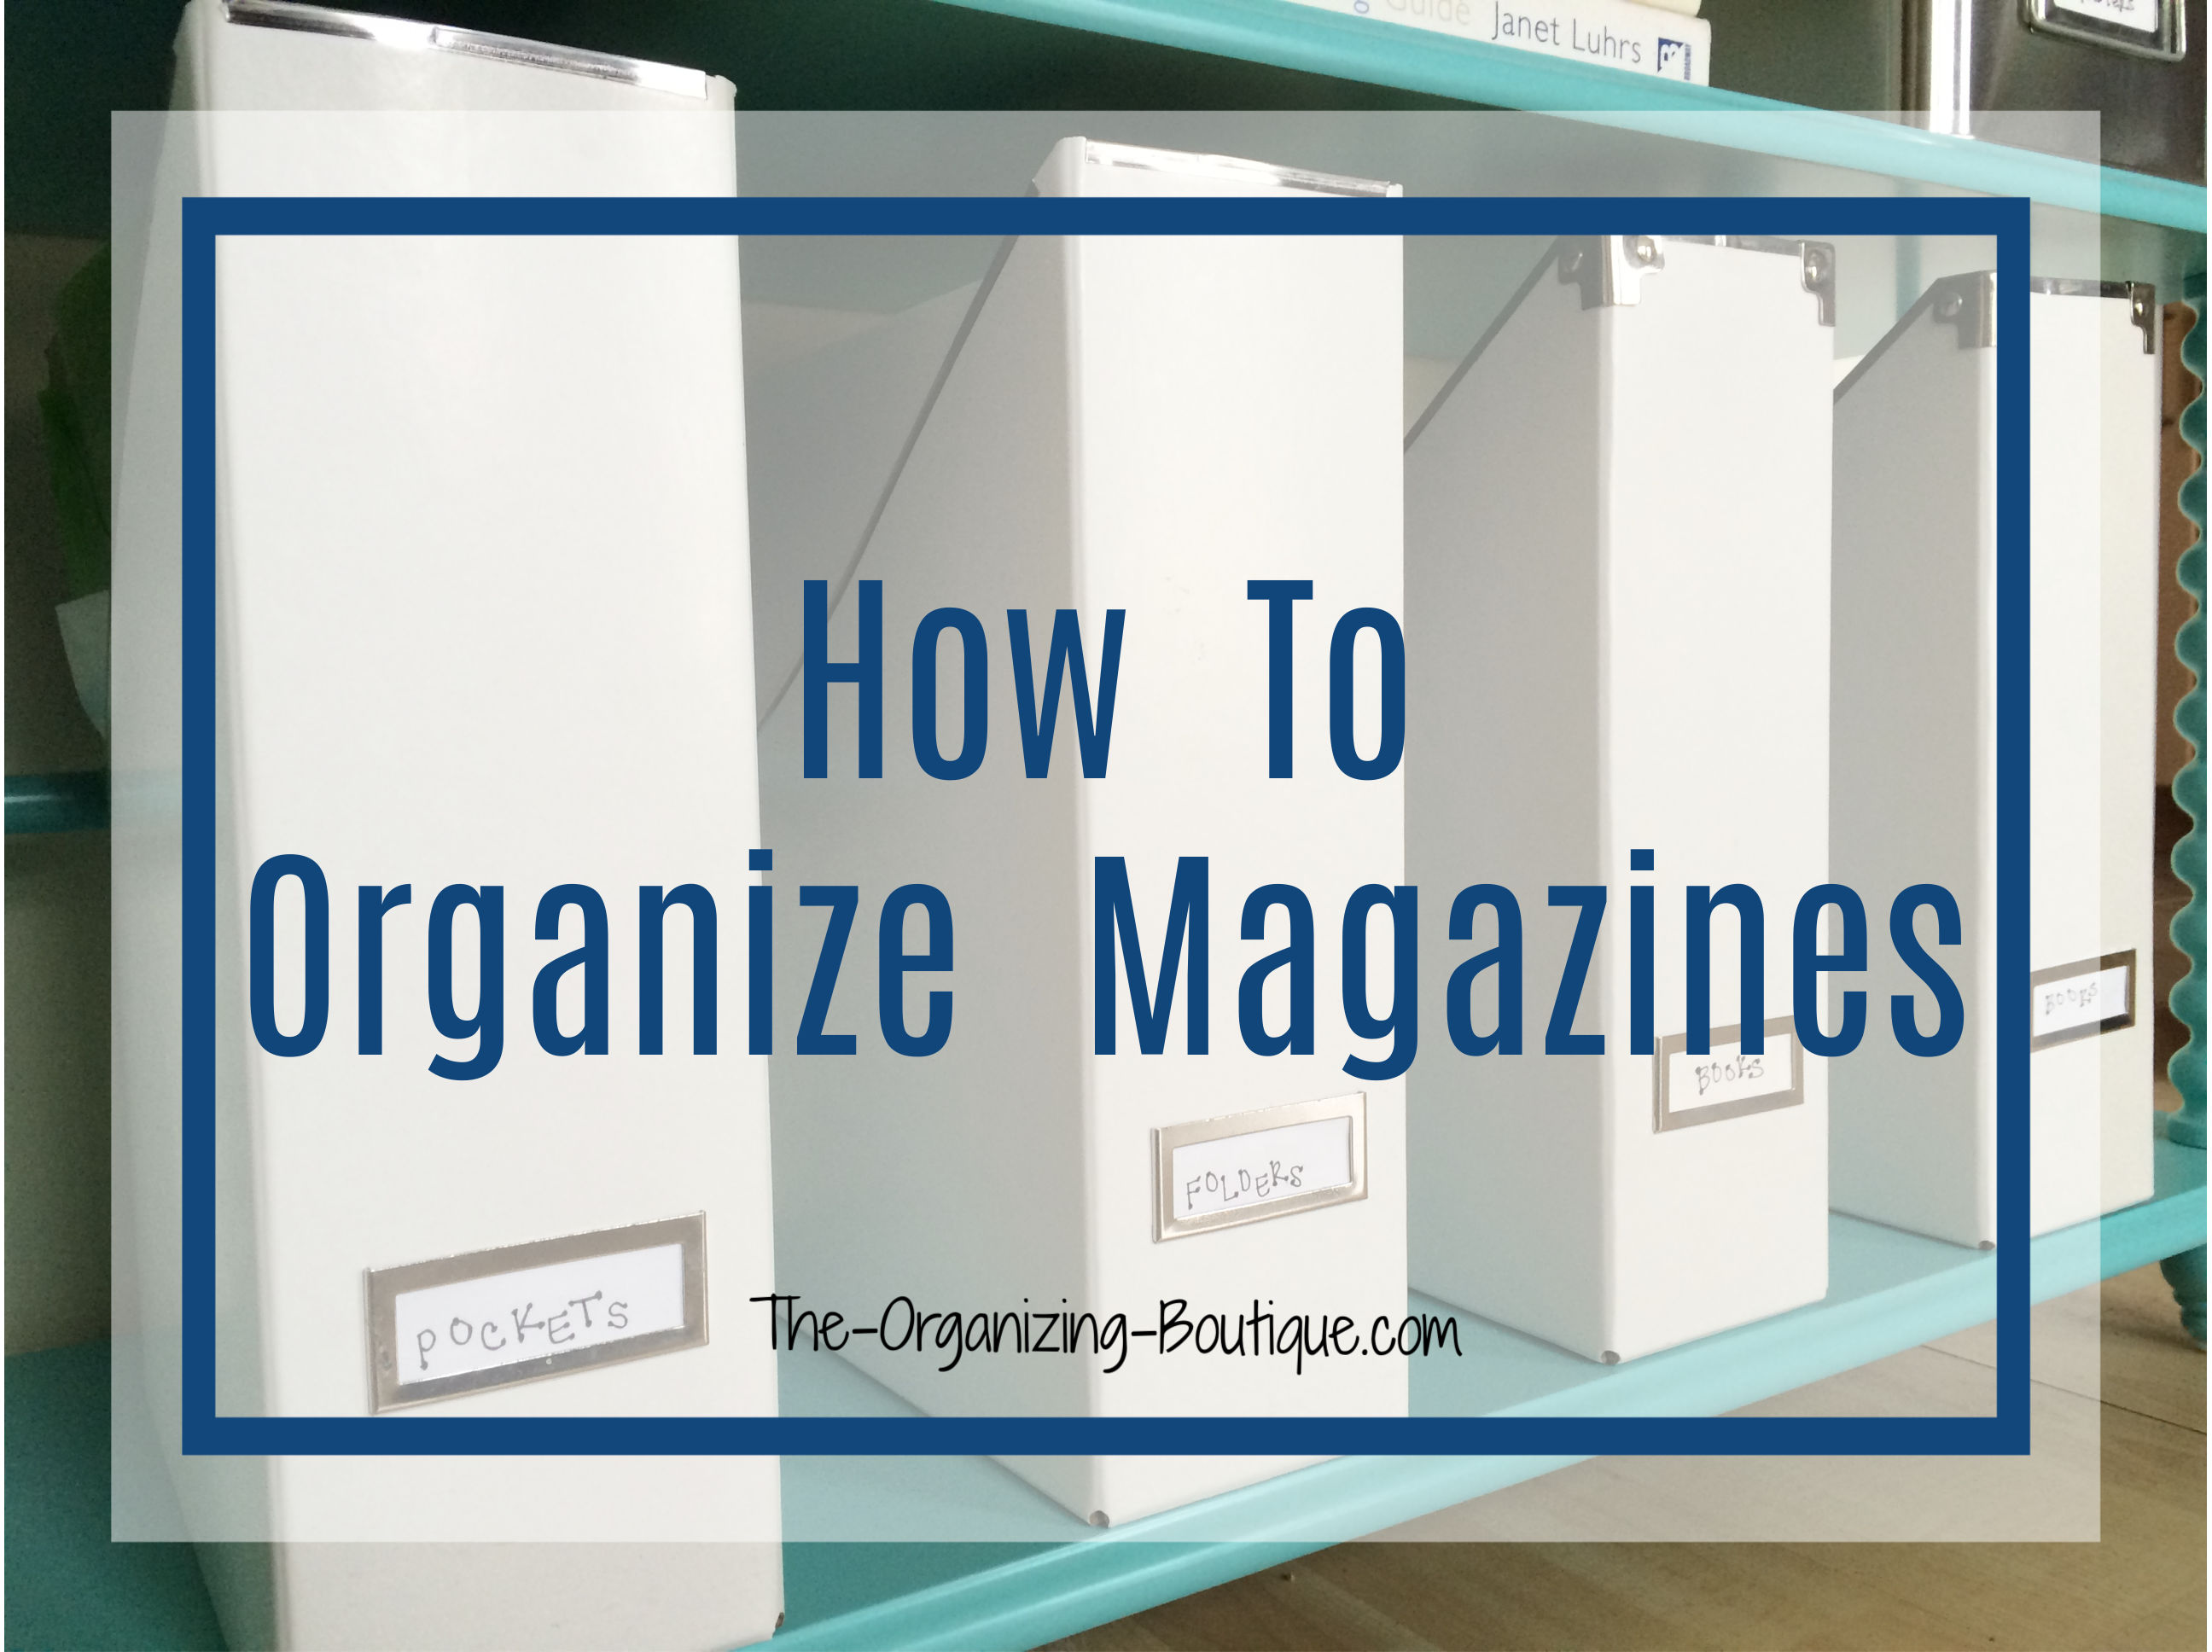 Organize Magazines Title